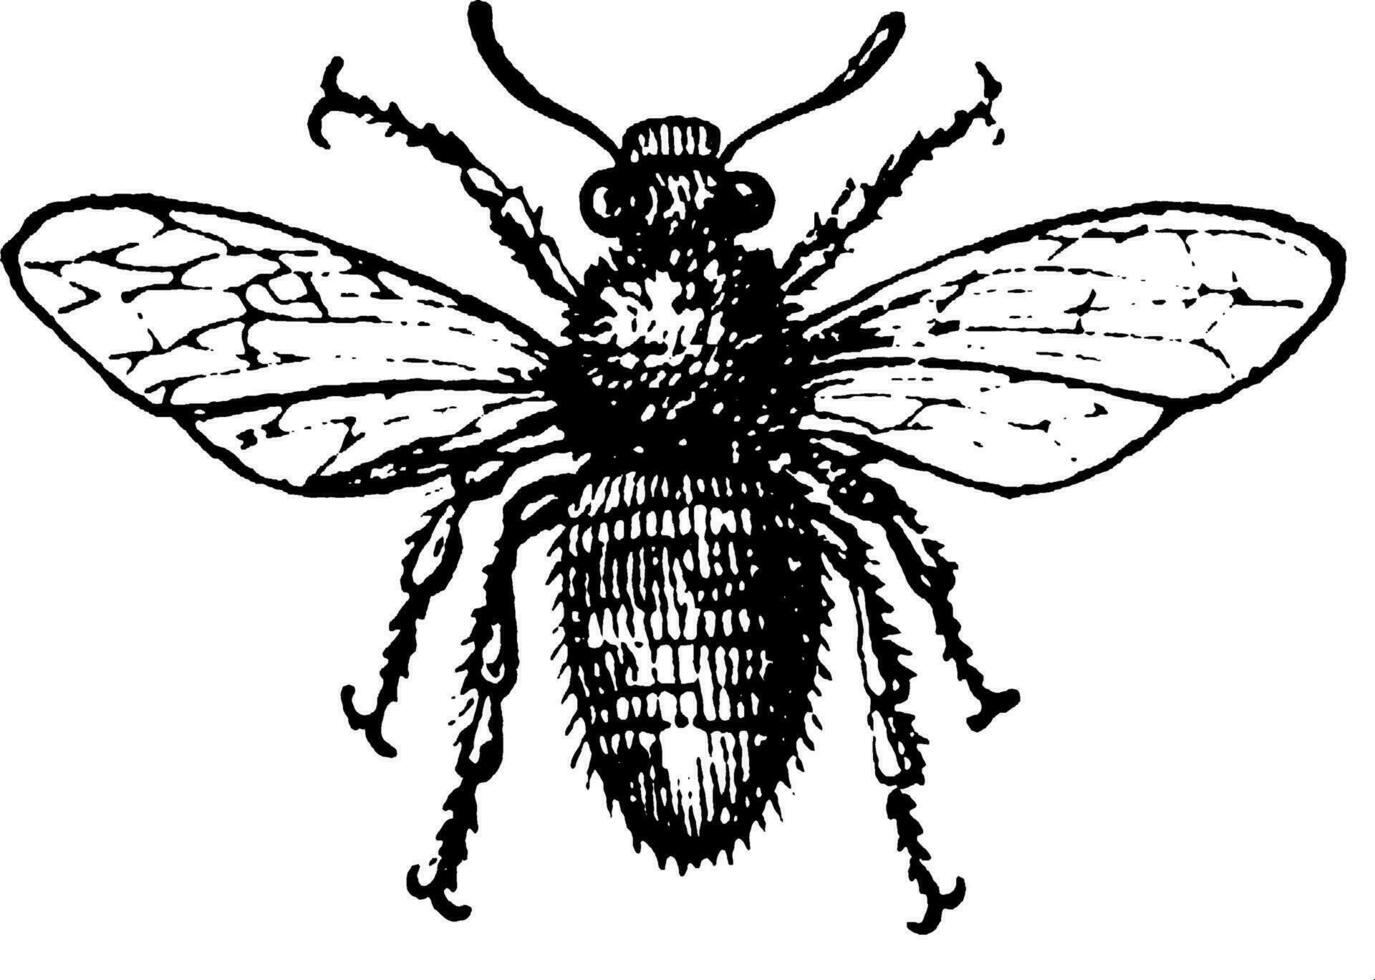 Bee, vintage illustration. vector